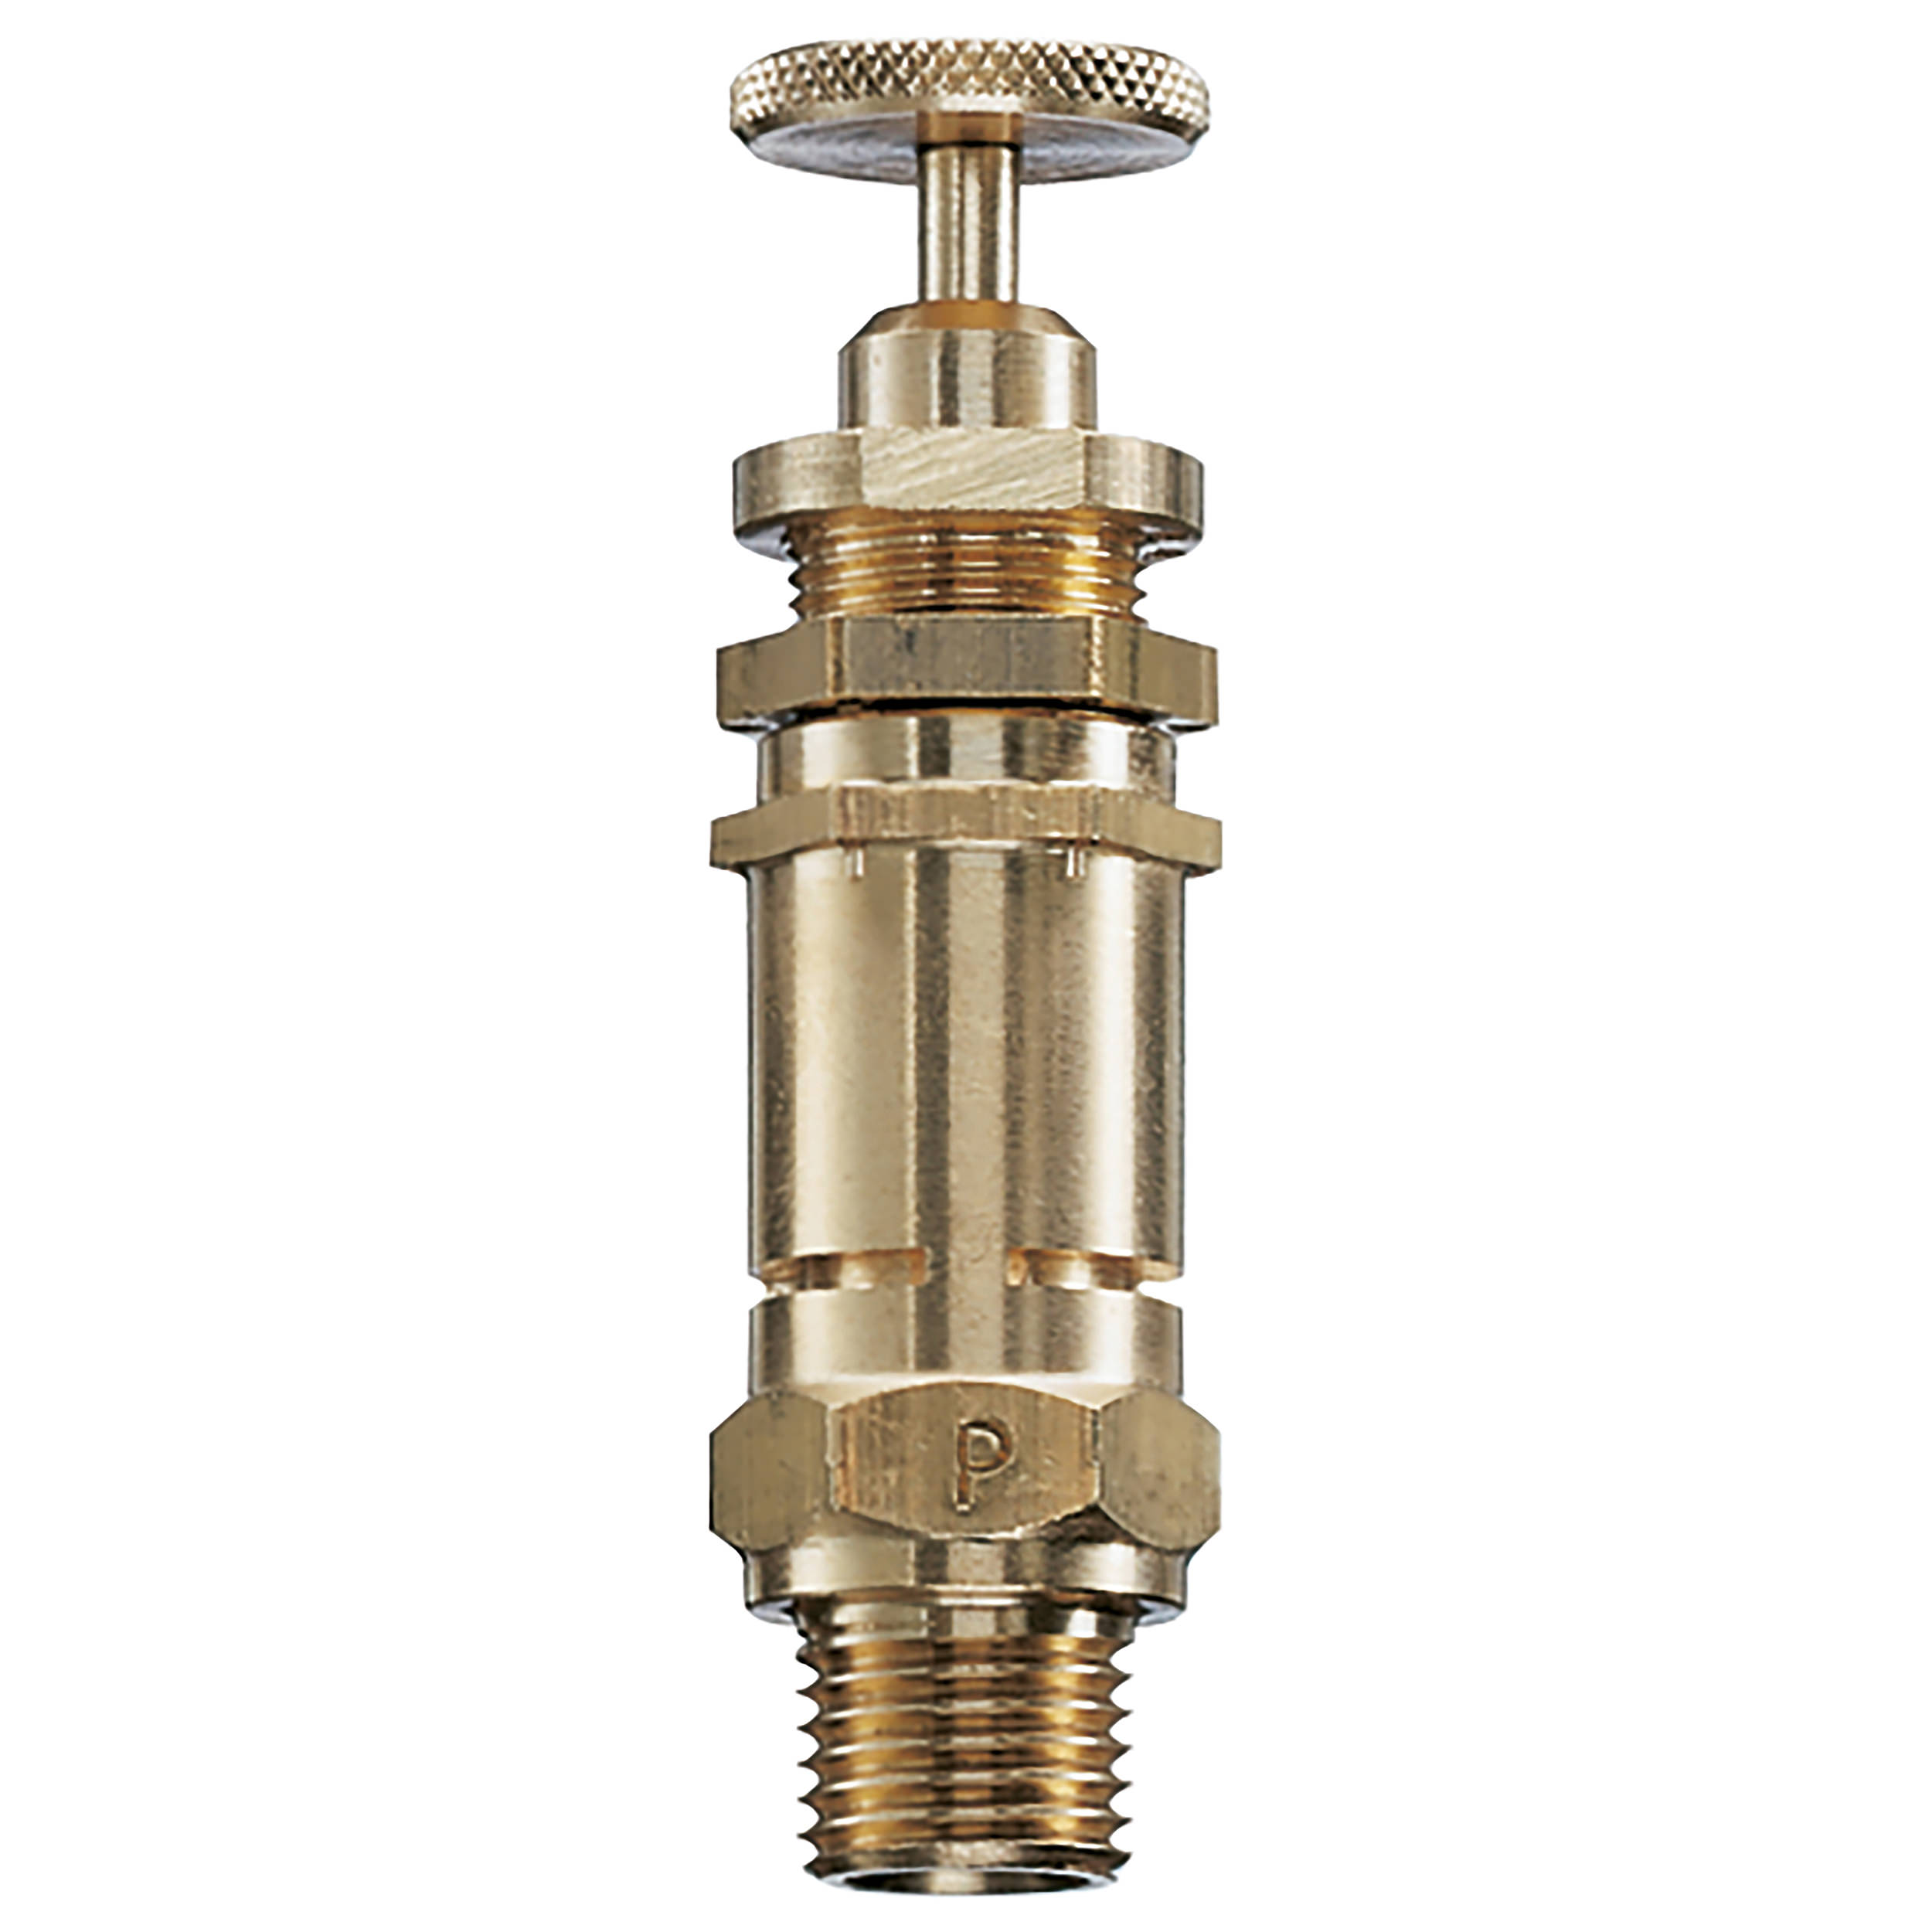 Classic blow-off valve DN 6, G¼, metall, pressure: 8.1-12 bar